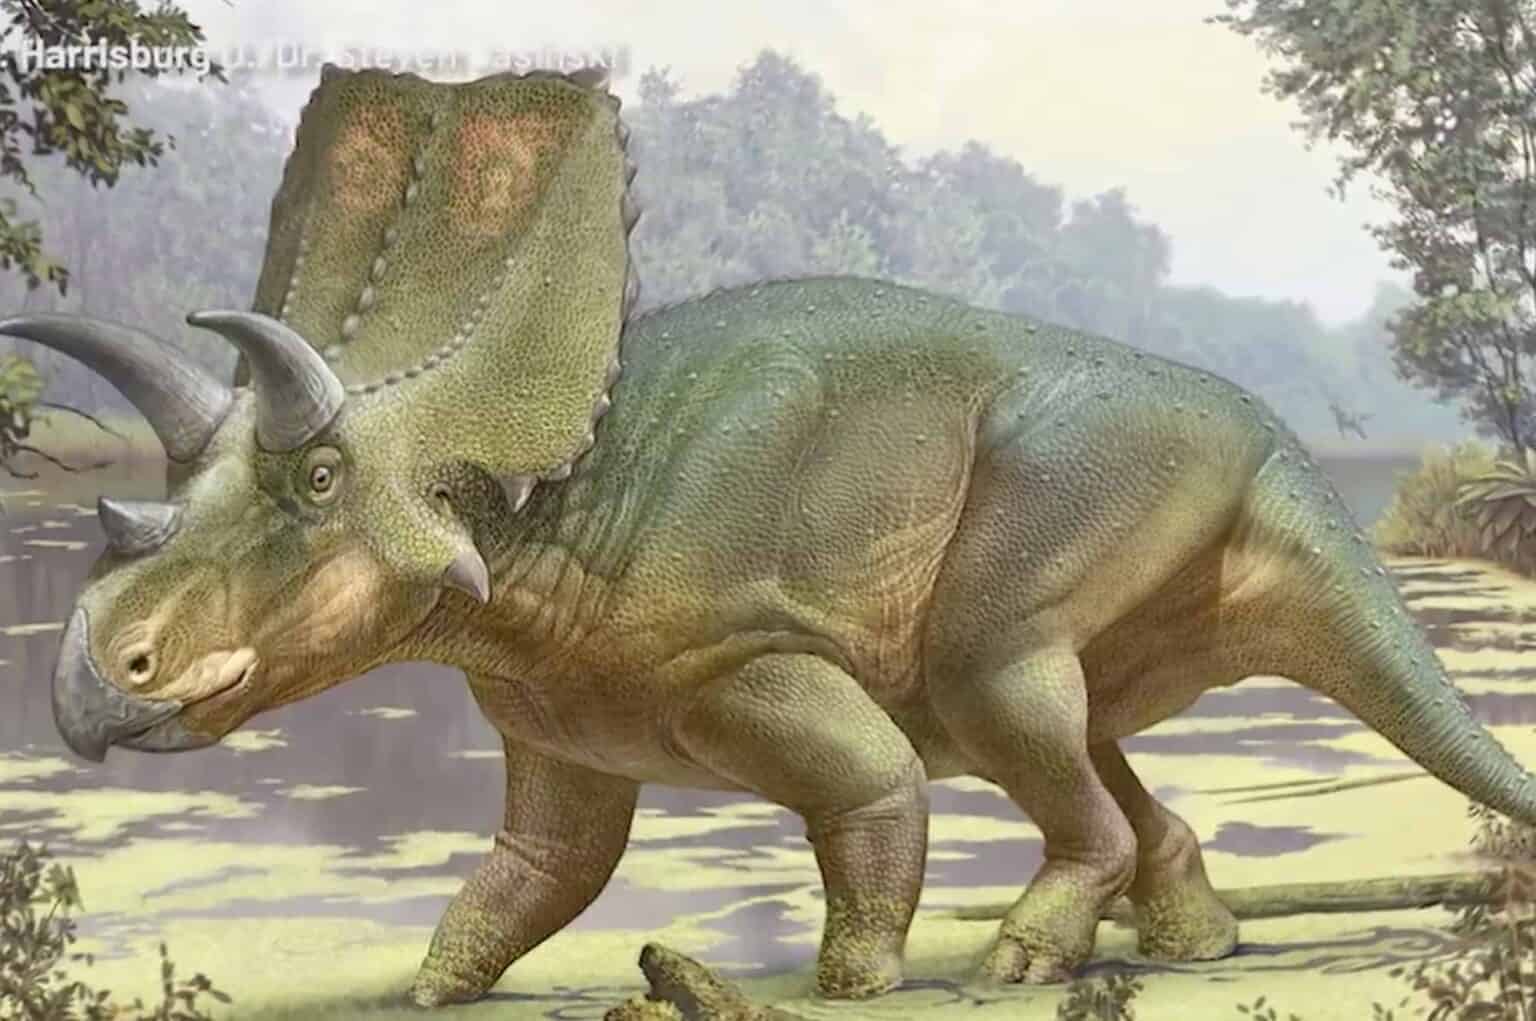 sierraceratops turneri found in sierra county new mexico